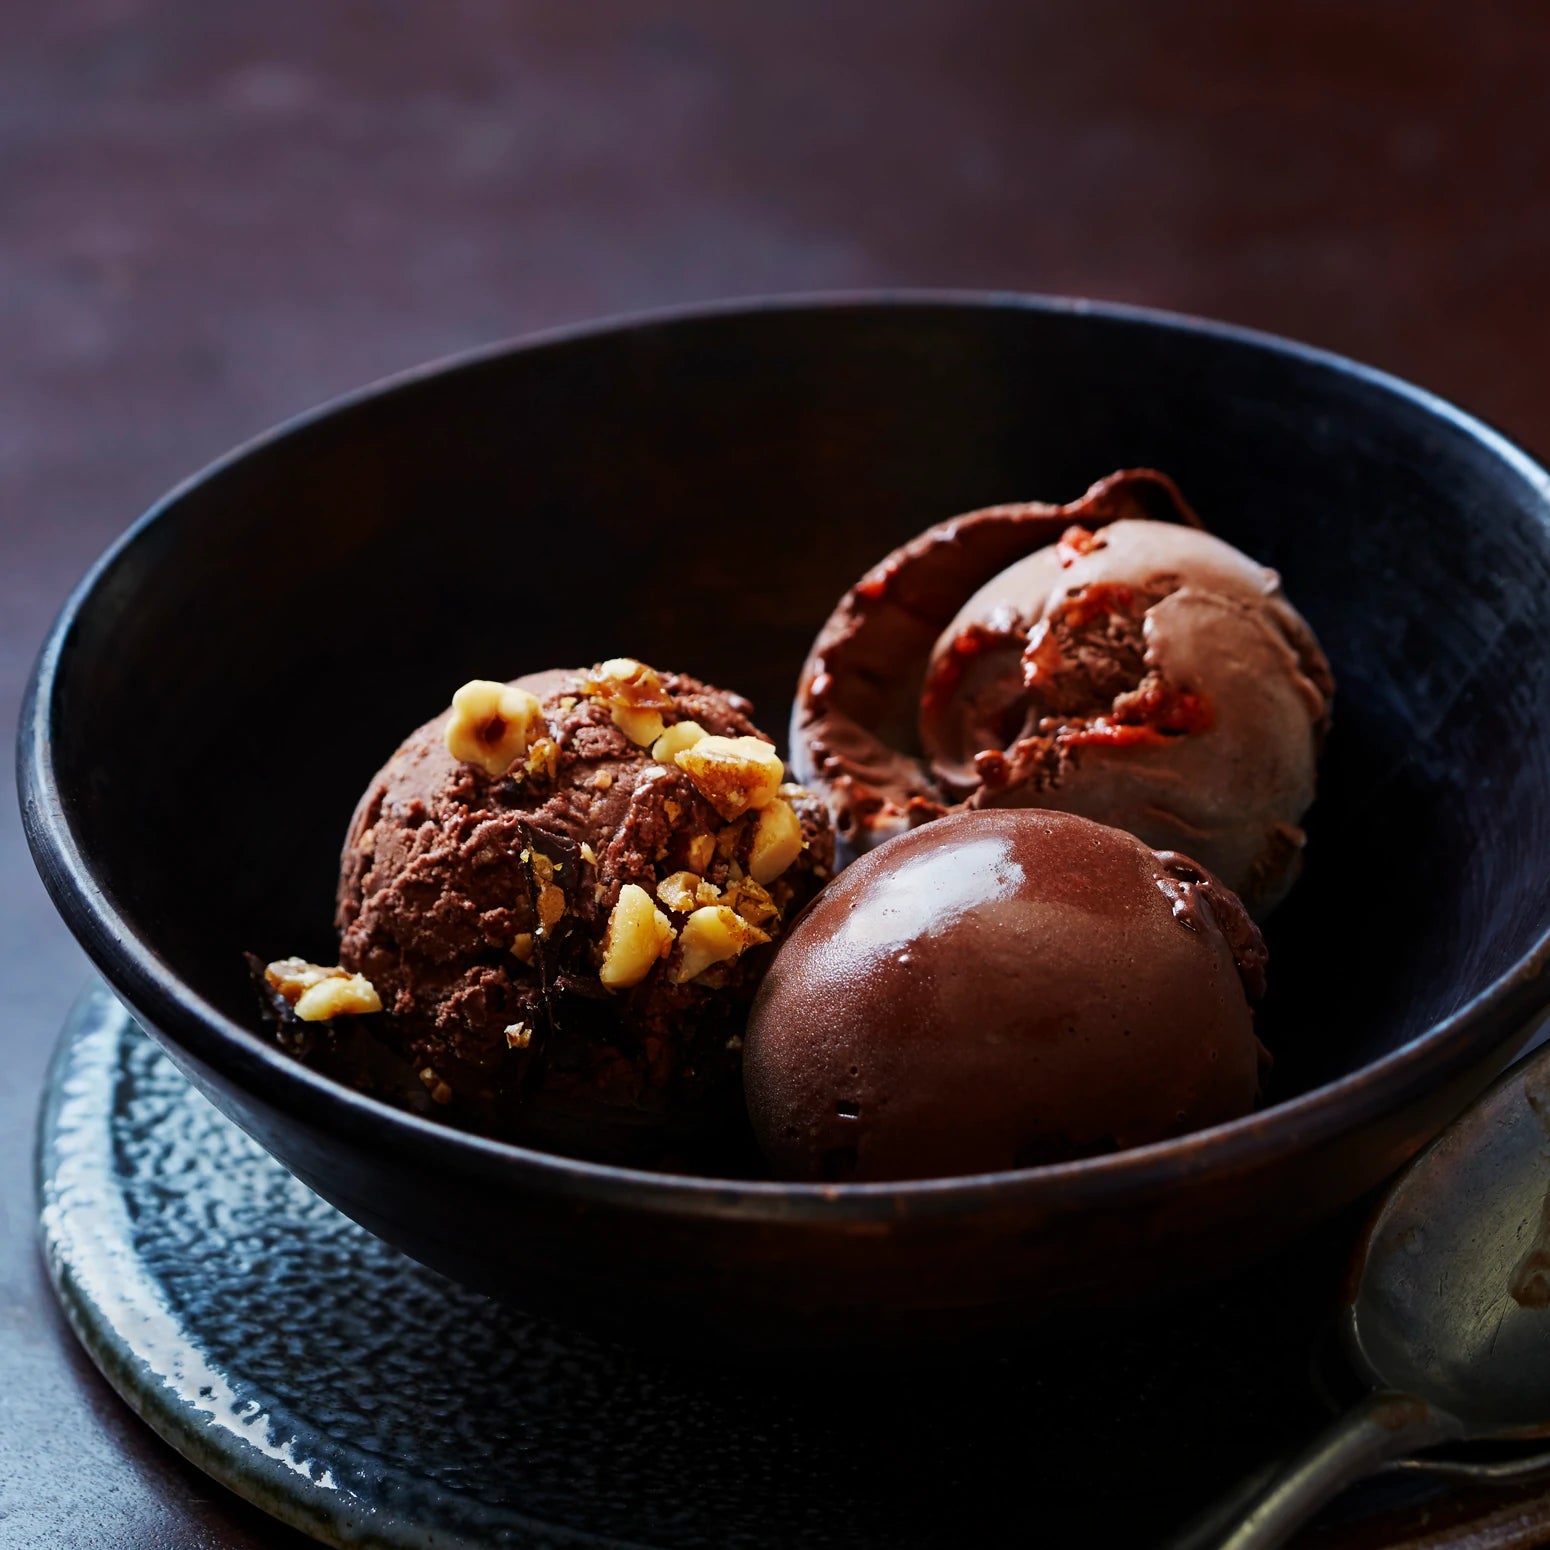 Three scoops of Belgian Chocolate with hazelnut crunch